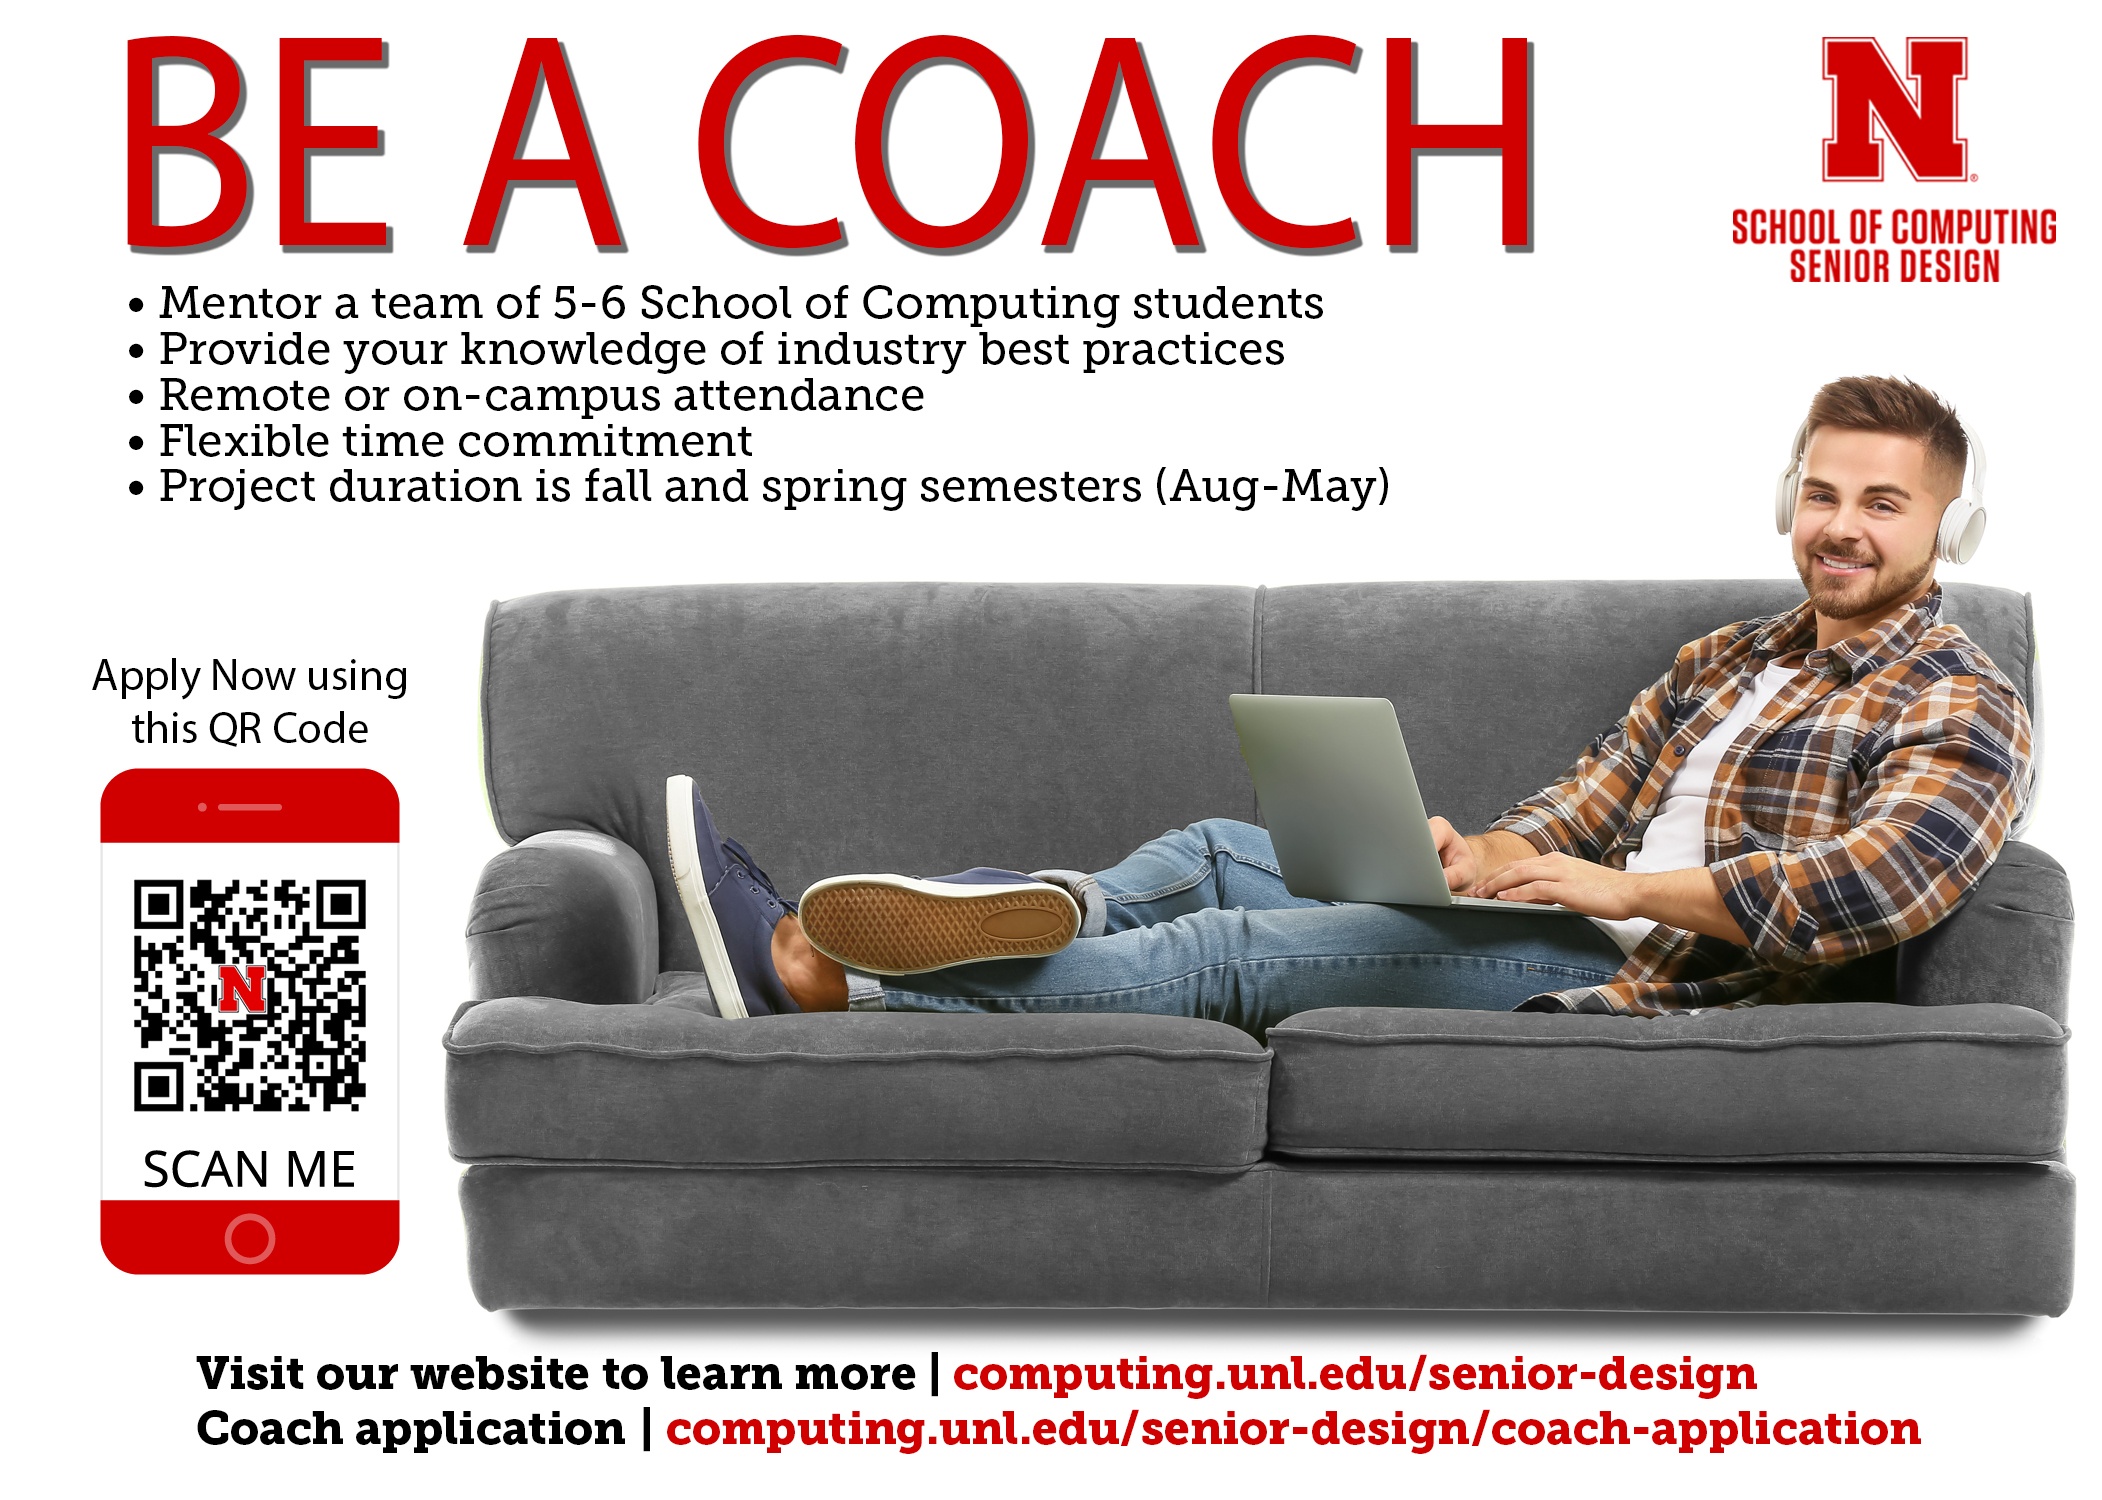 Become a Senior Design coach